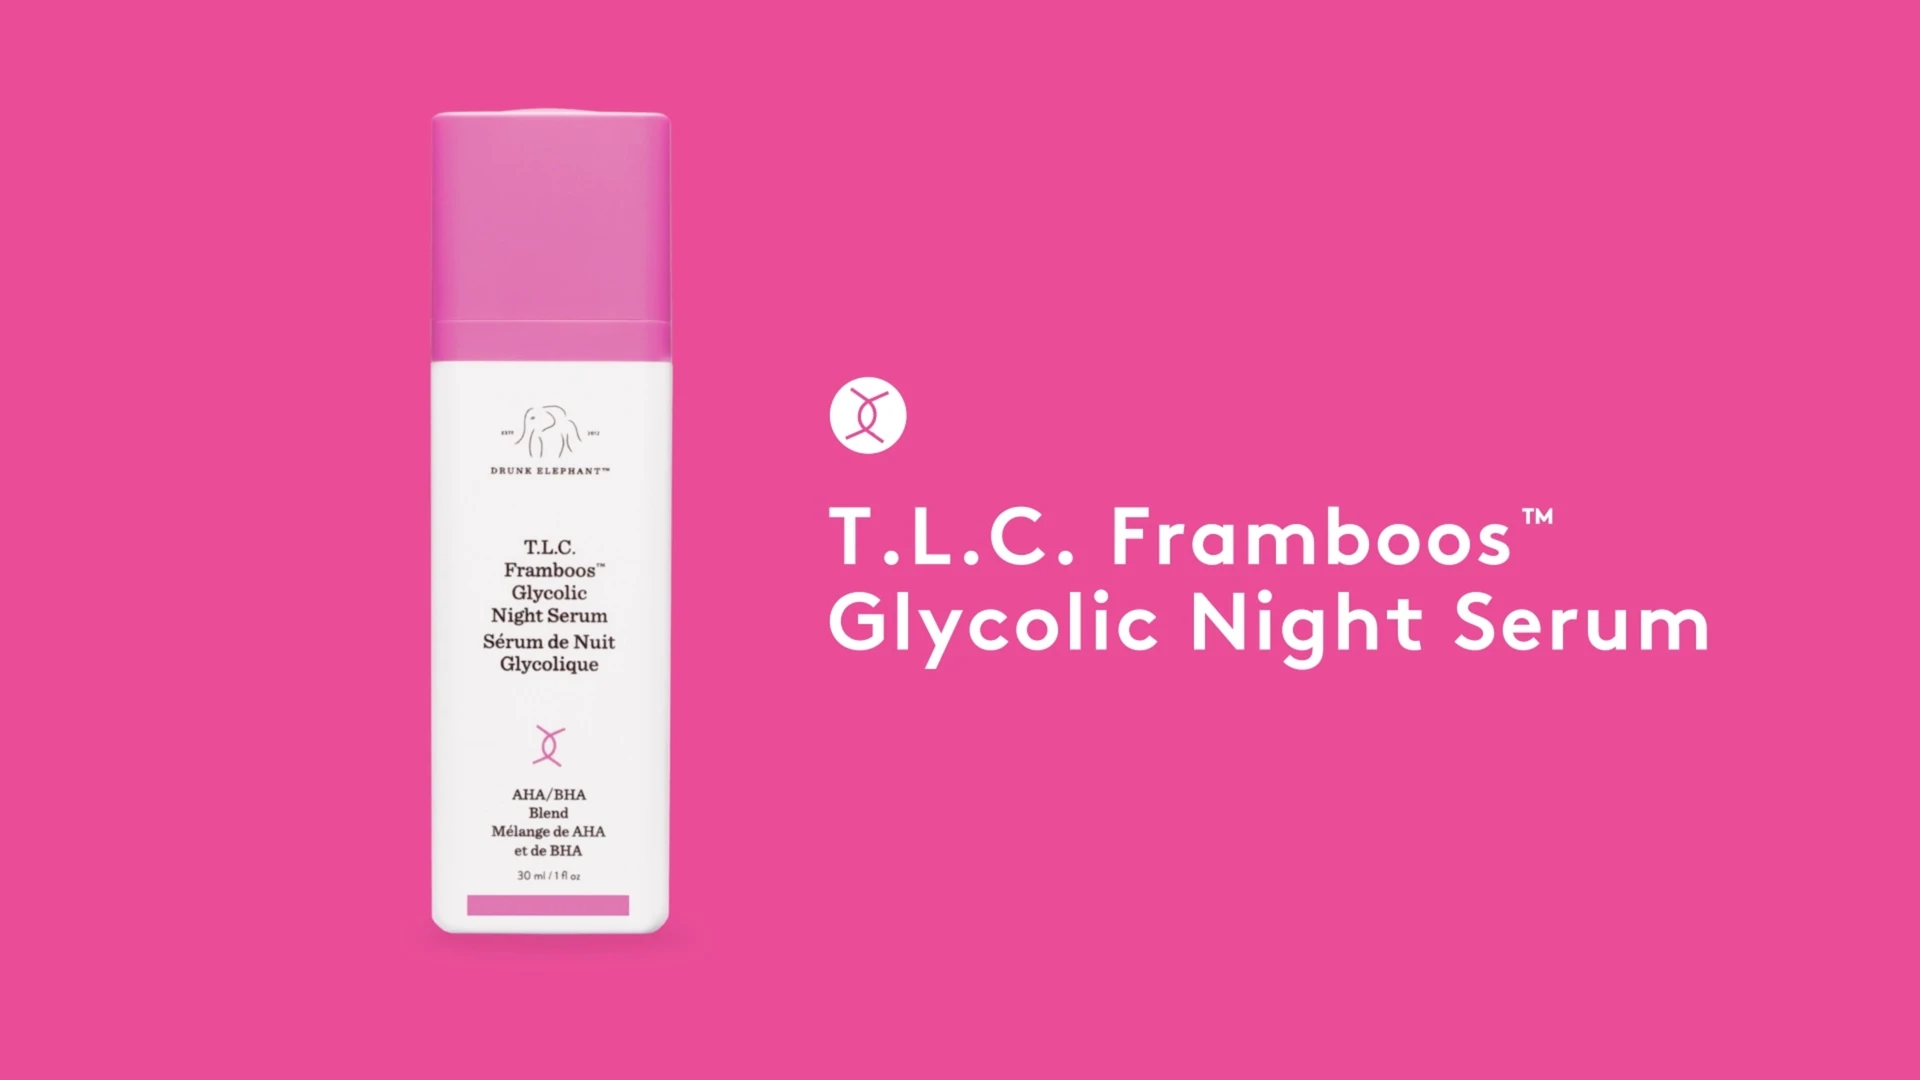 video detailing the benefits of TLC Framboos Glycolic Night Serum